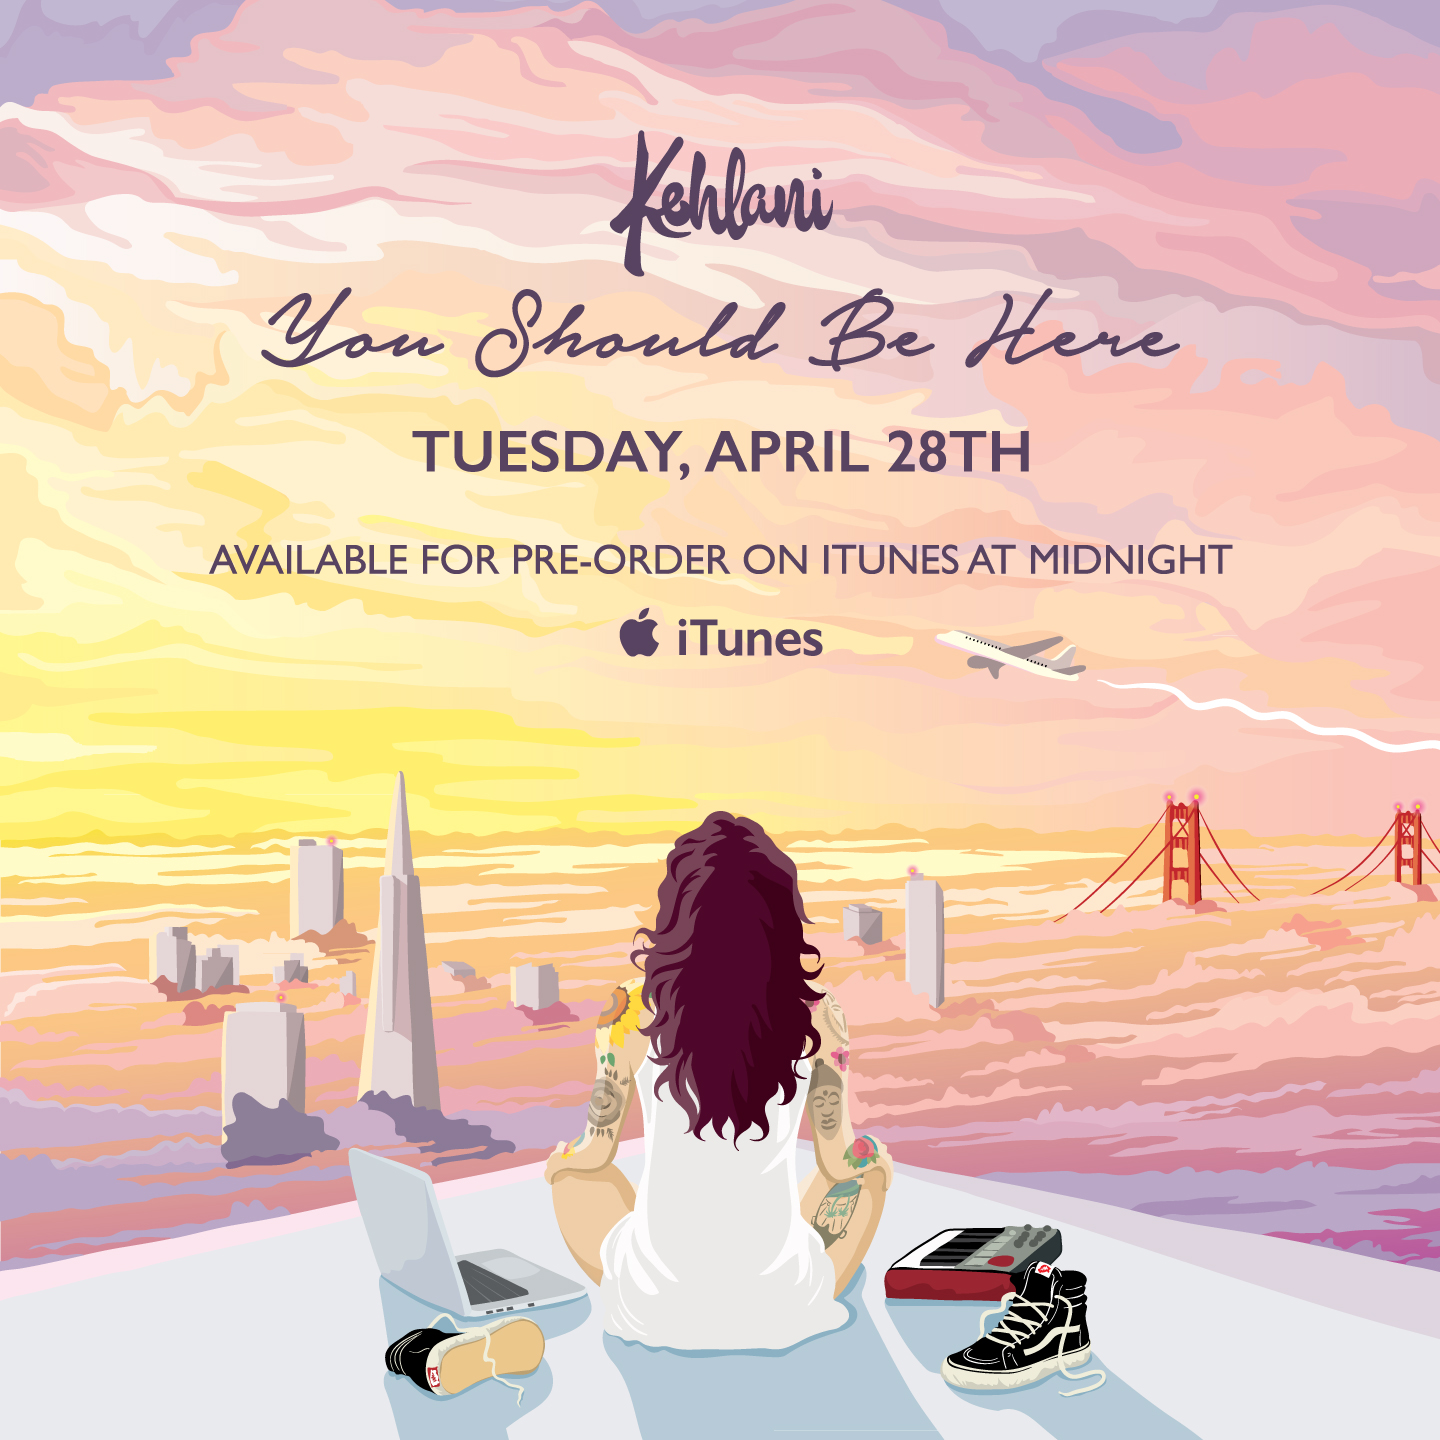 New Music: Kehlani "You Should Be Here" (Full Stream)